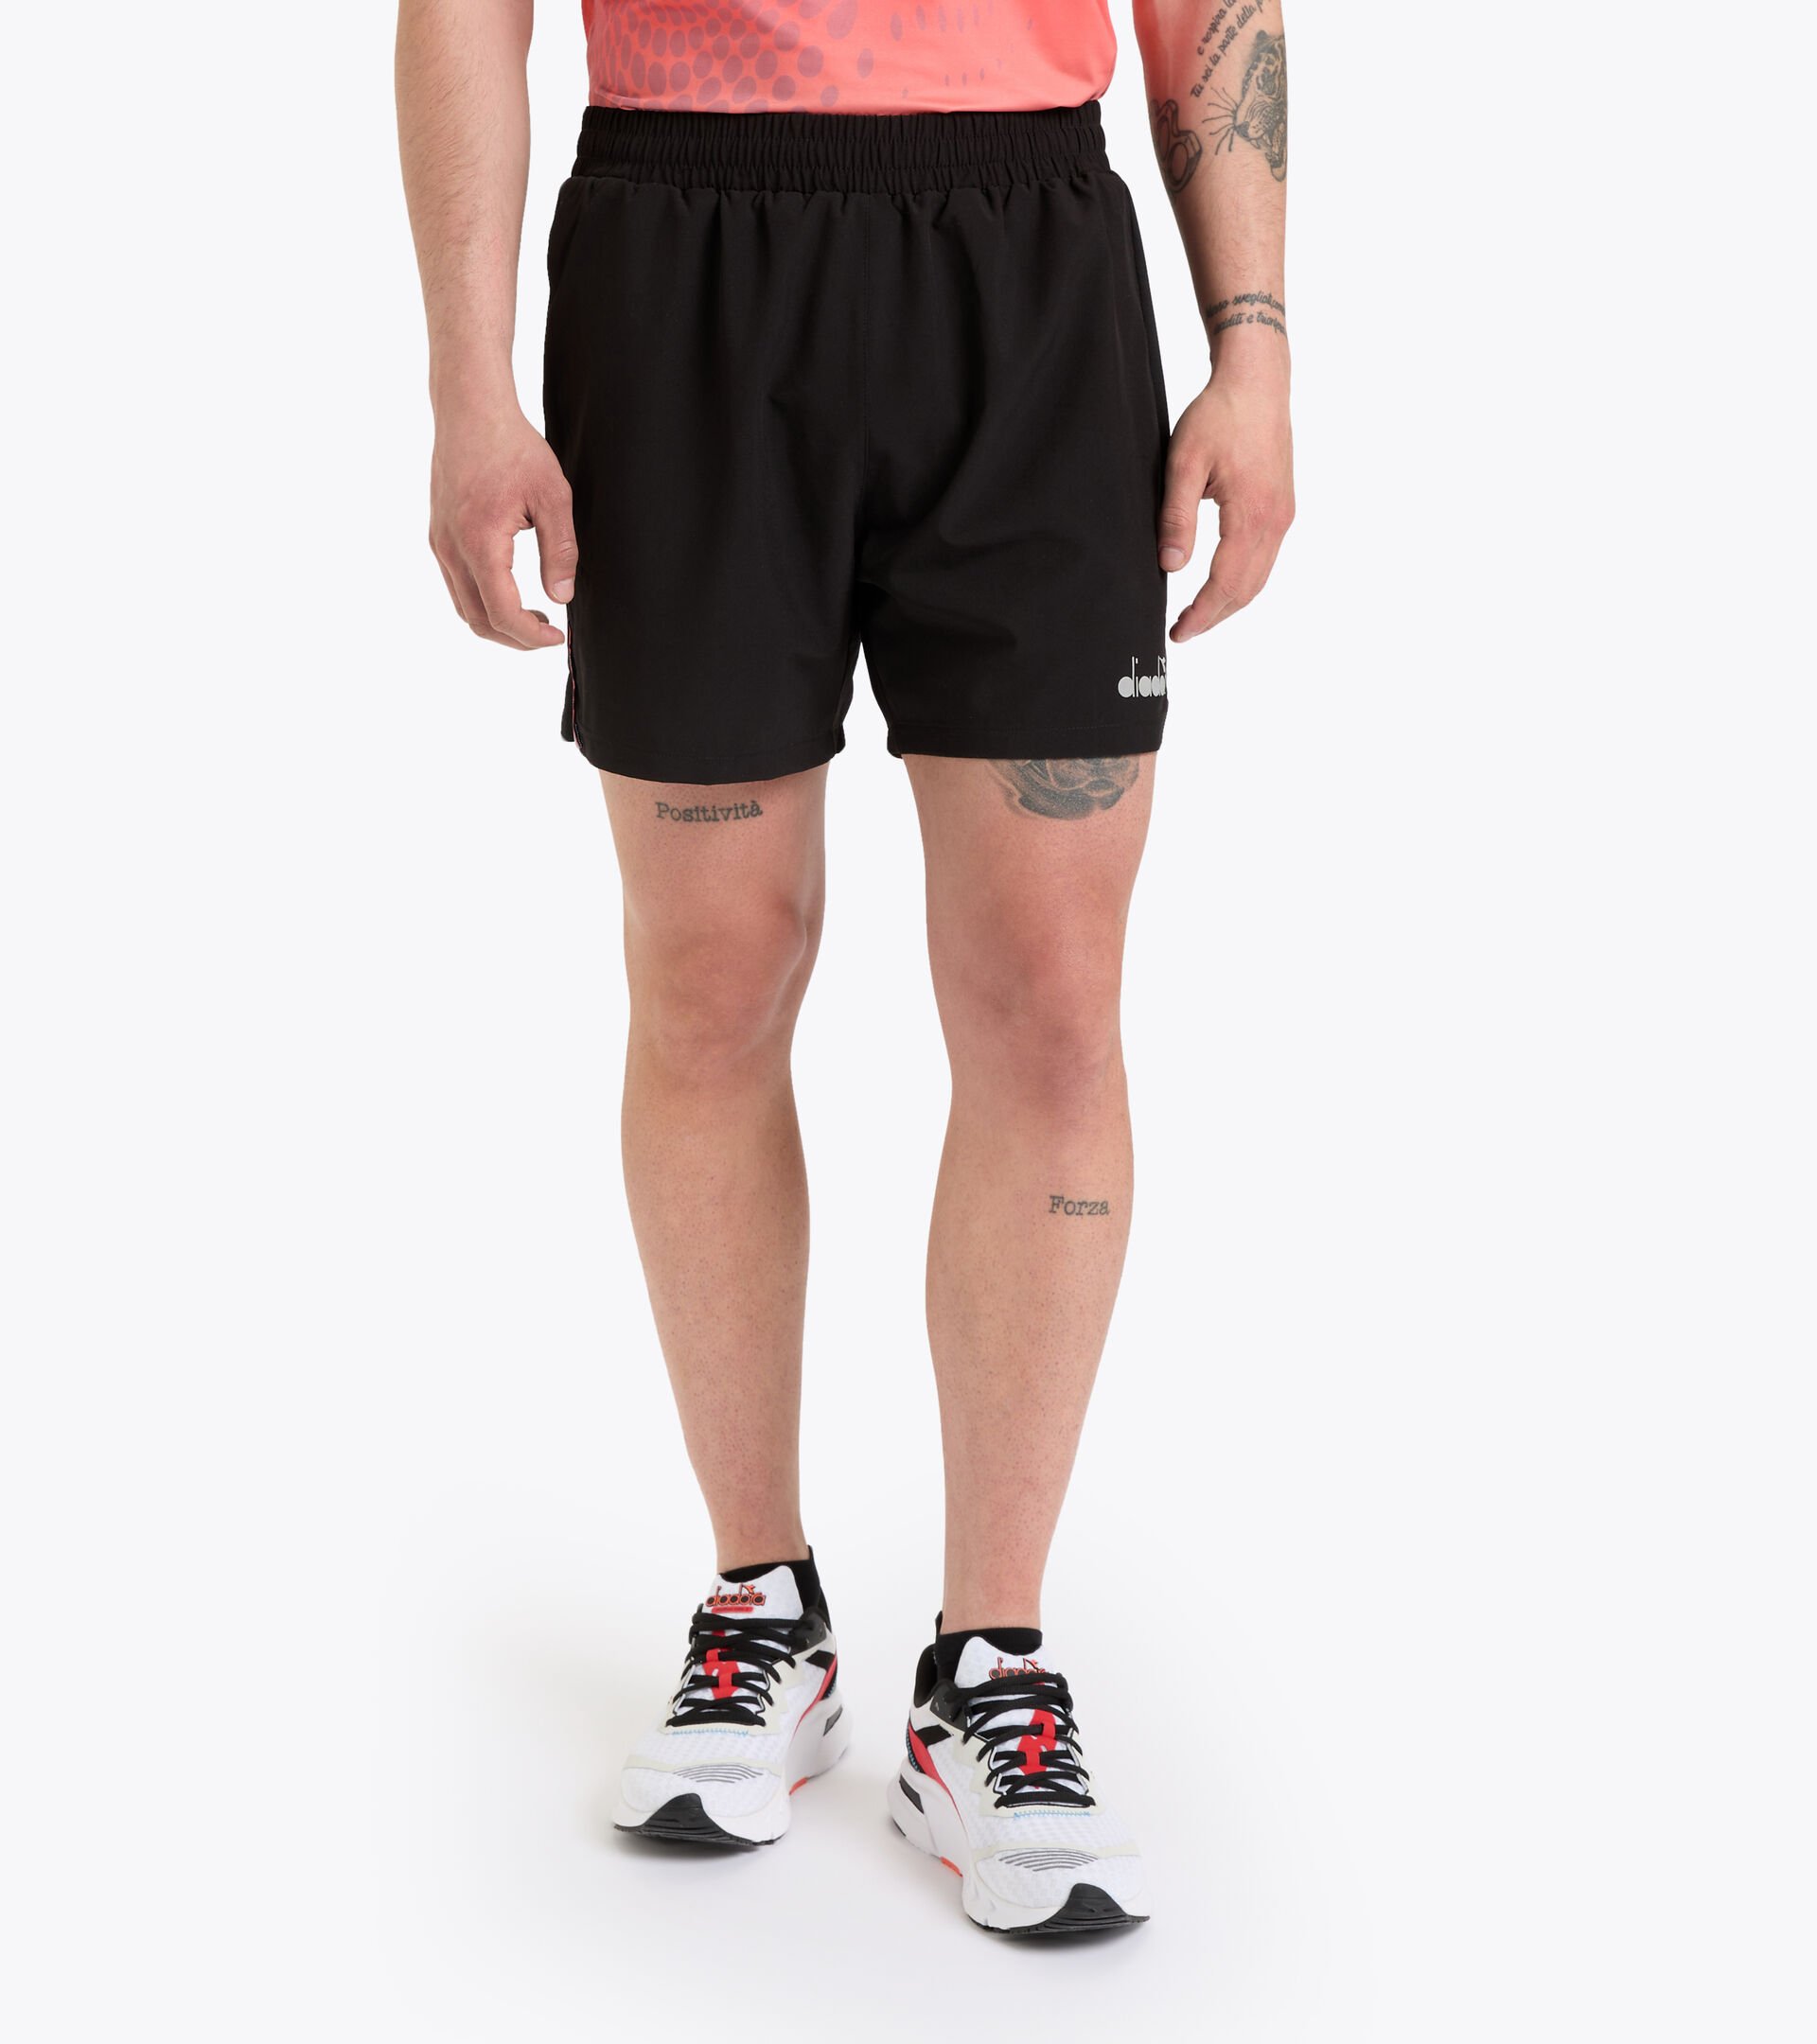 MICROFIBER SHORTS 12,5 CM Pantalones cortos para correr - Hombre - Tienda línea Diadora MX